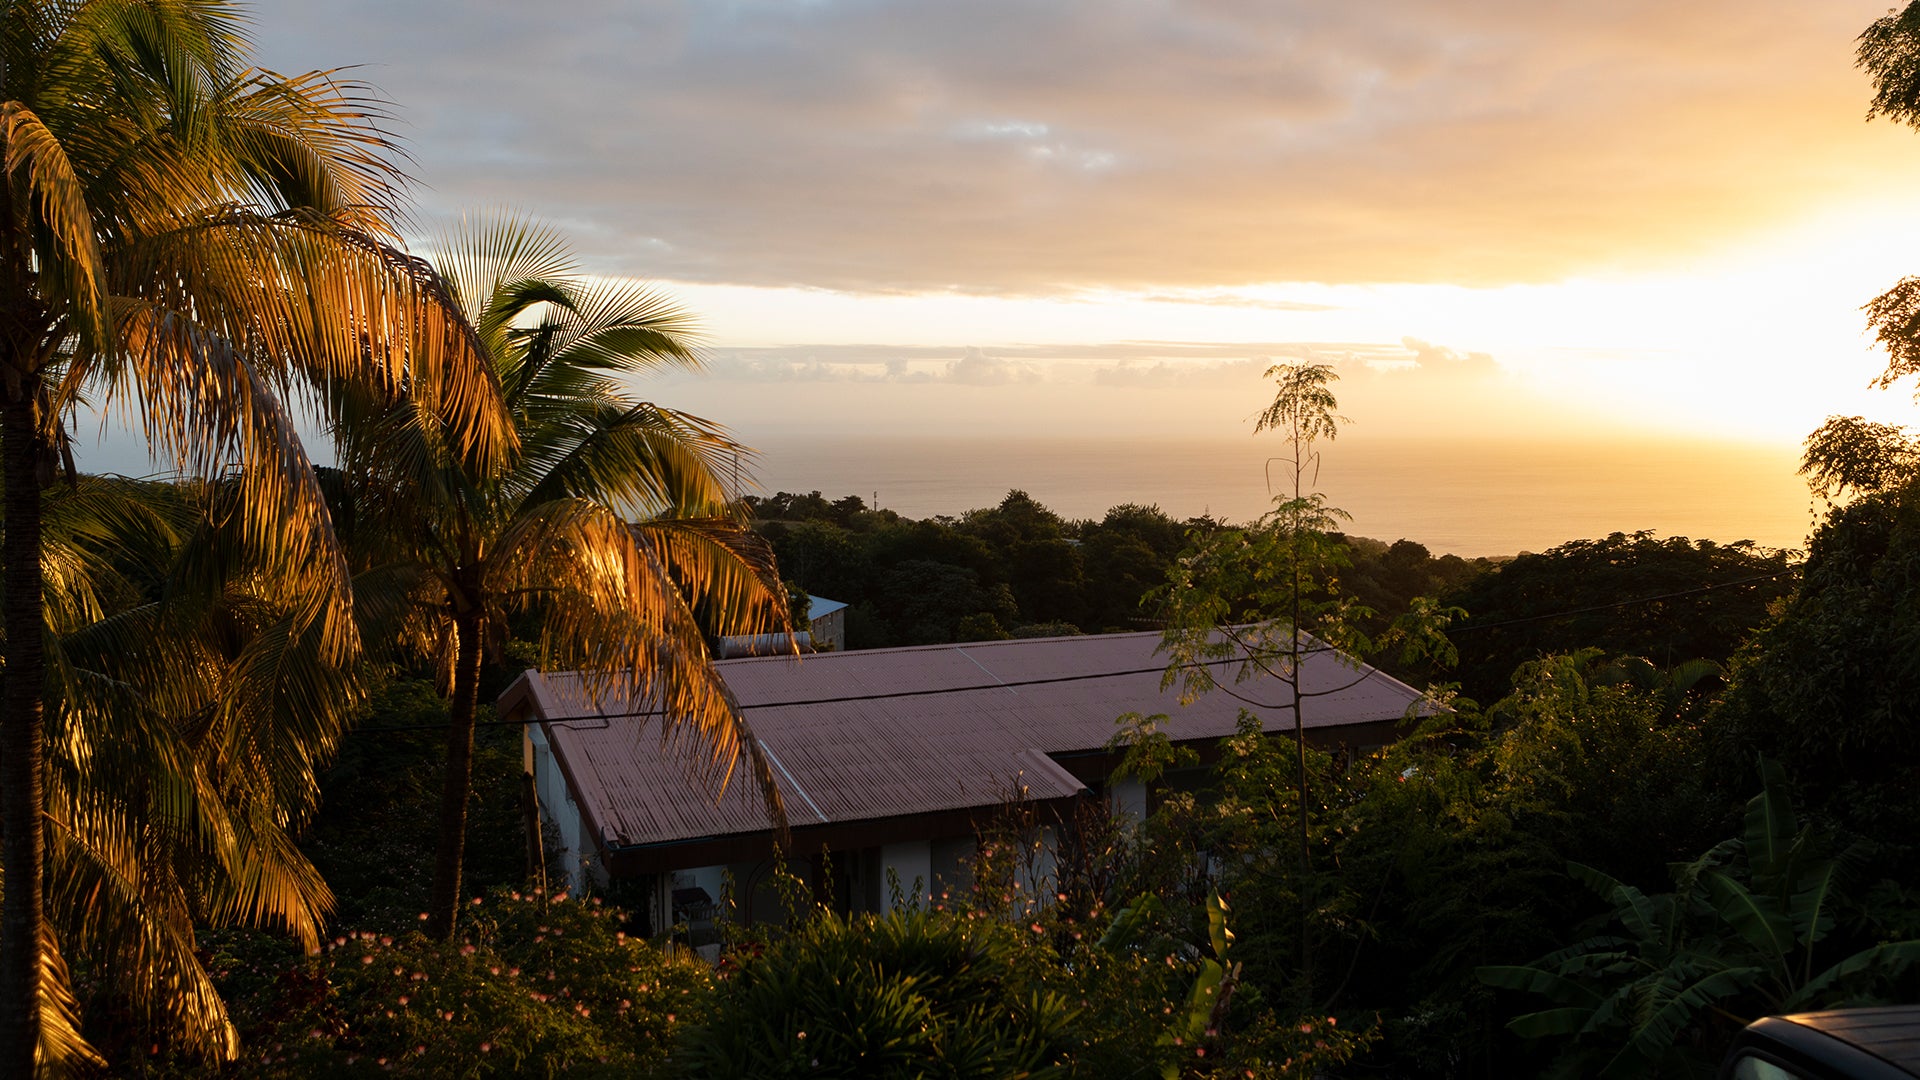 Martinique during sunrise. Photo by Jess Bernard